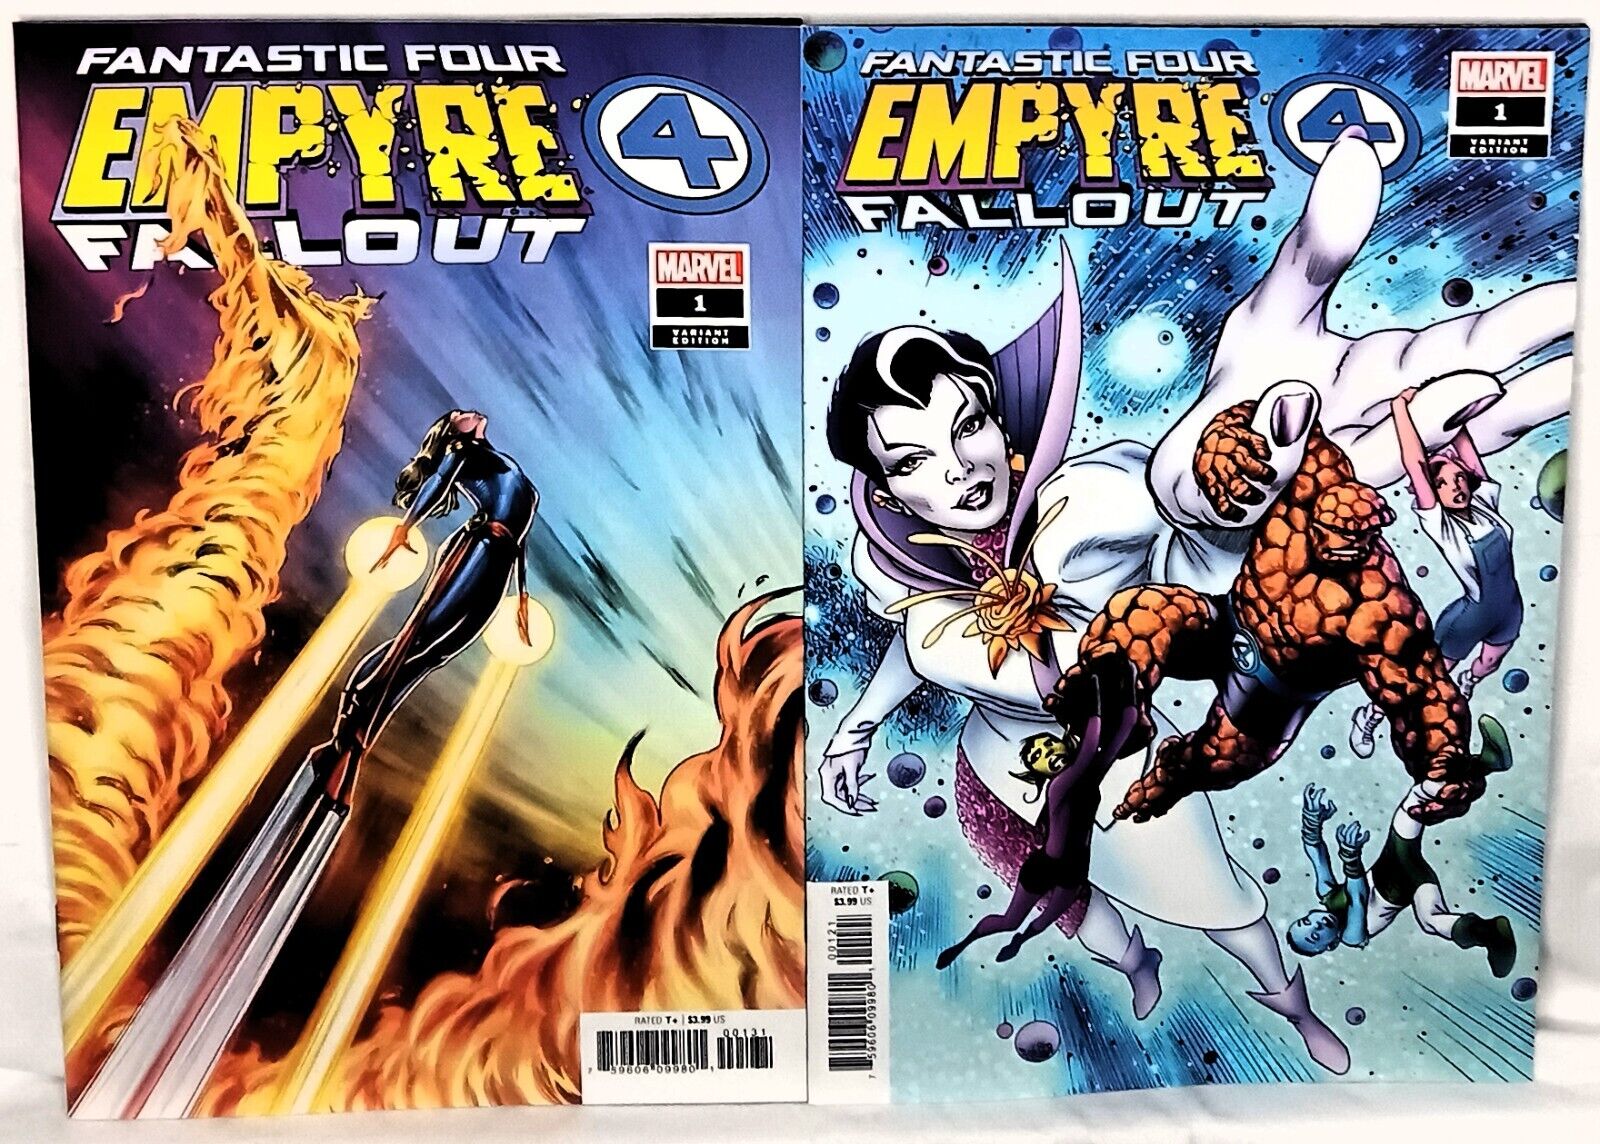 EMPYRE FALLOUT Fantastic Four #1 Variant Covers Marvel Comics MCU